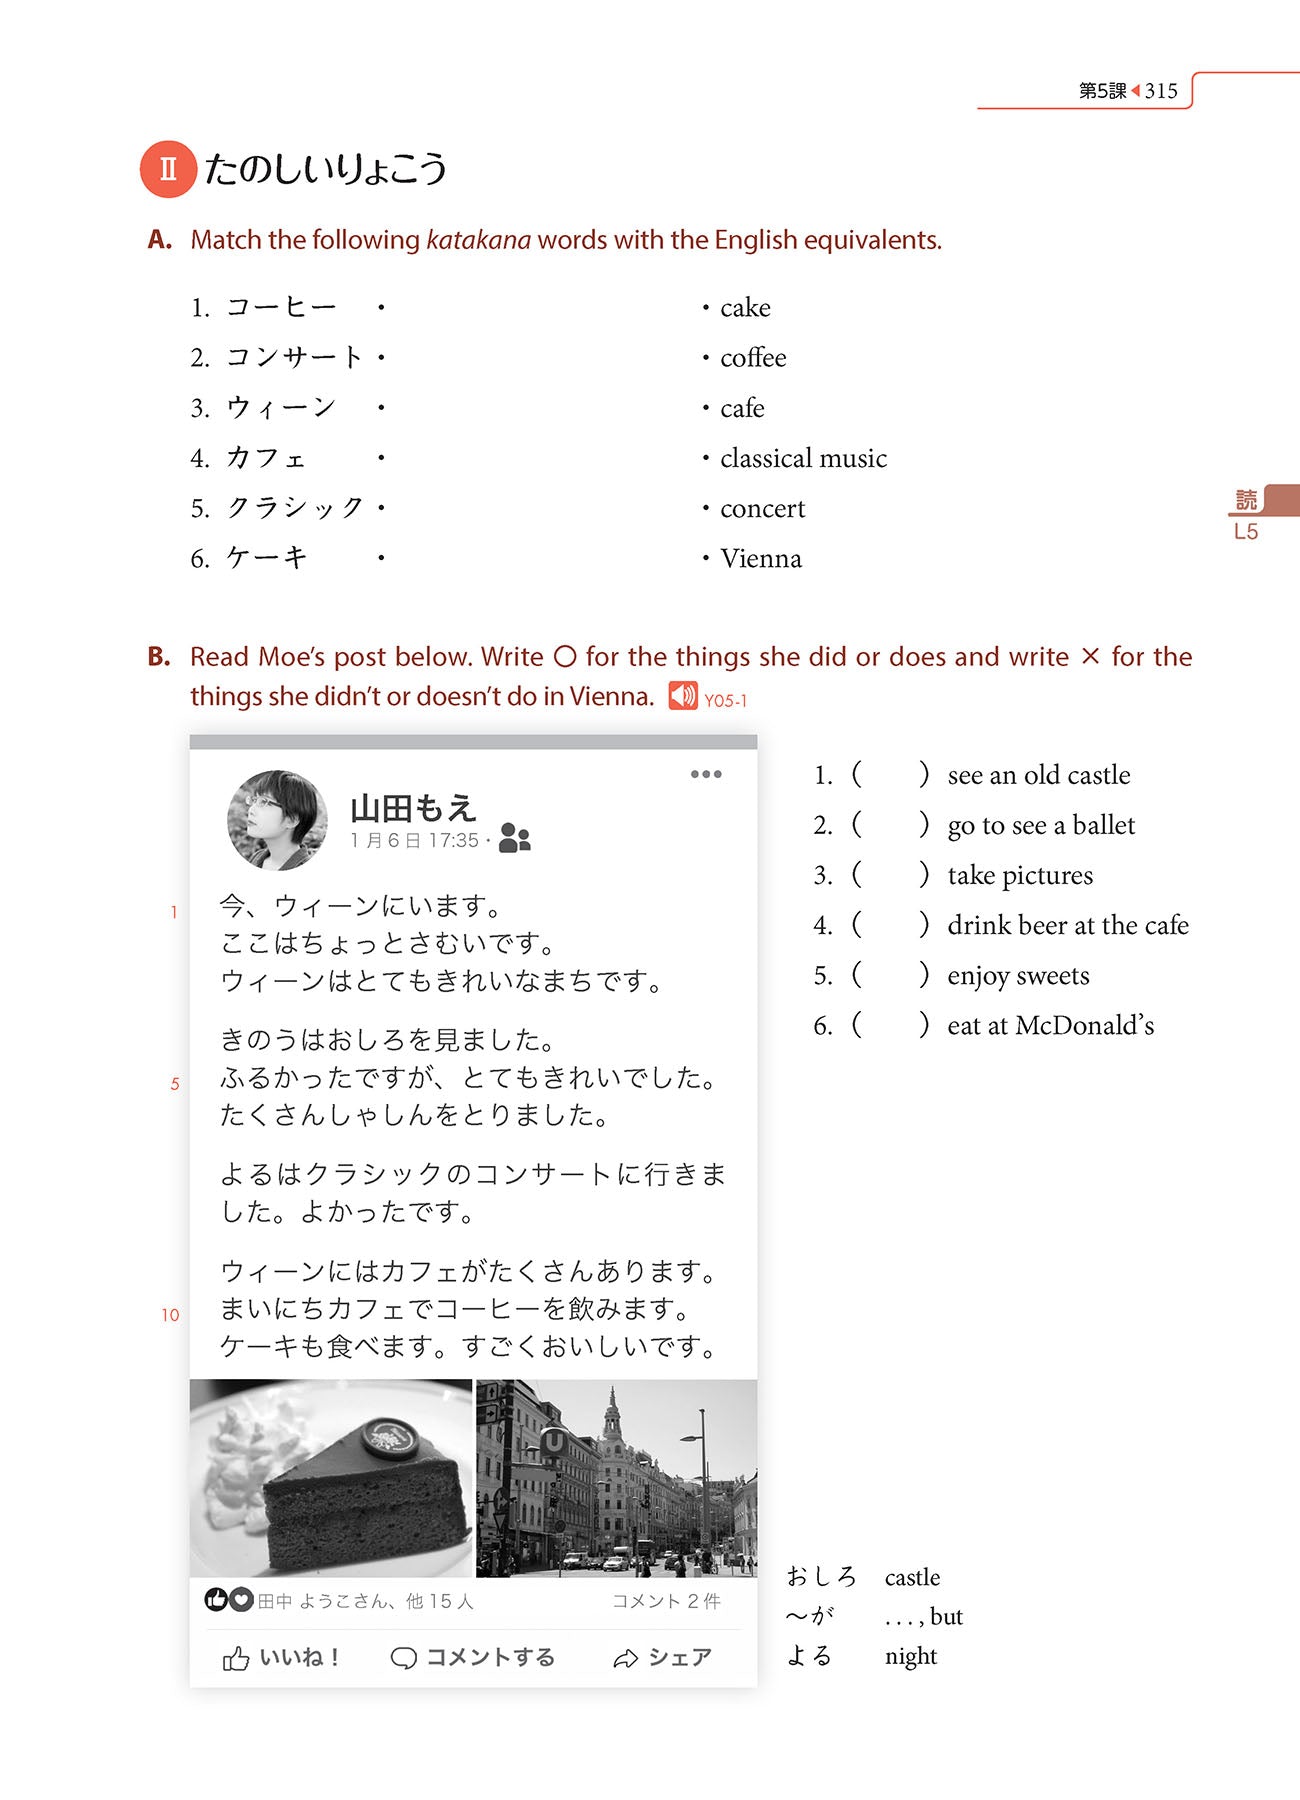 Genki Textbook 1 - Sample Page 4